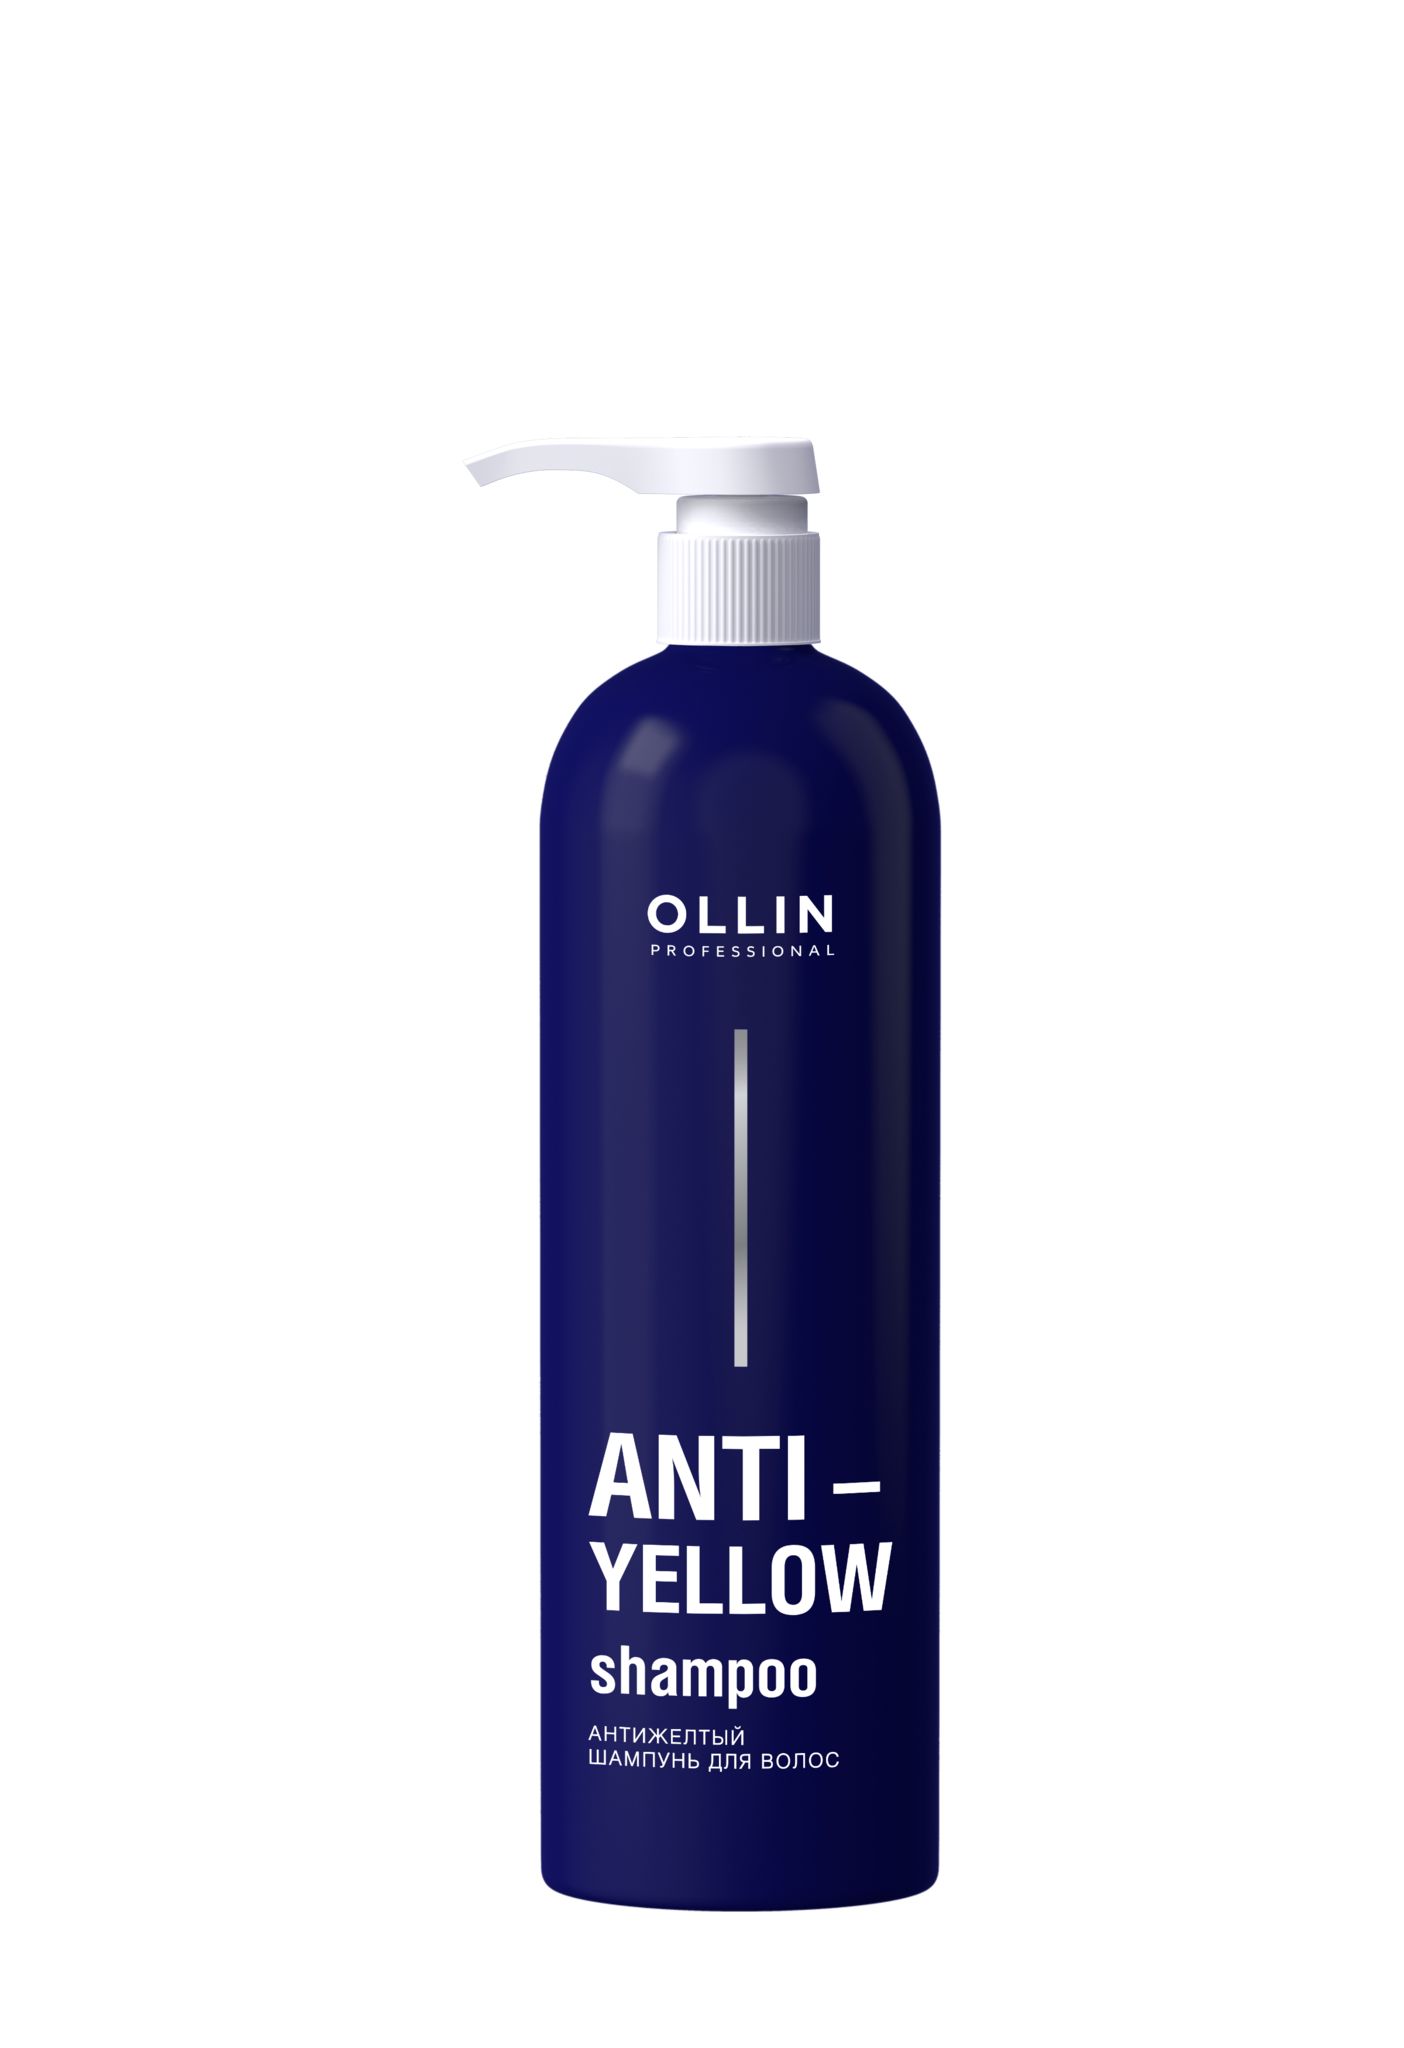 Анти жёлтый Шампунь для волос OLLIN Anti-Yellow Shampoo